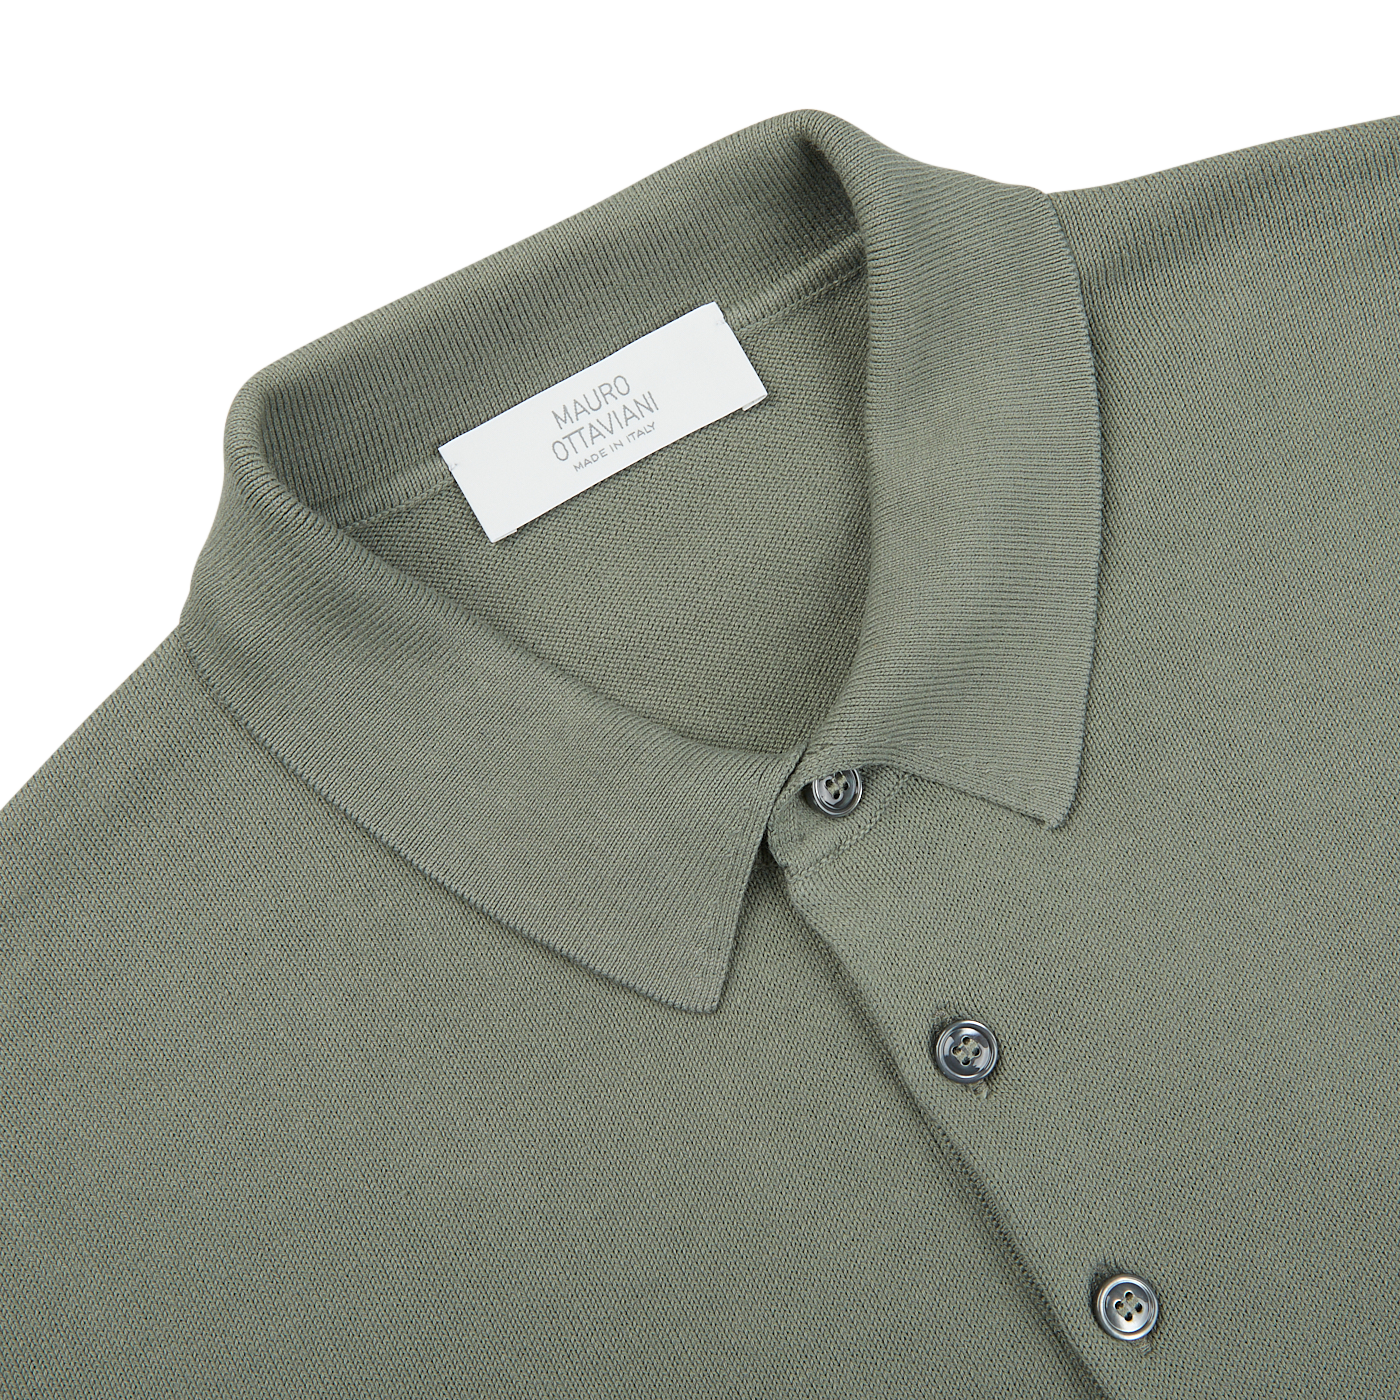 A close up of a khaki green Supima cotton LS polo shirt designed by Mauro Ottaviani.